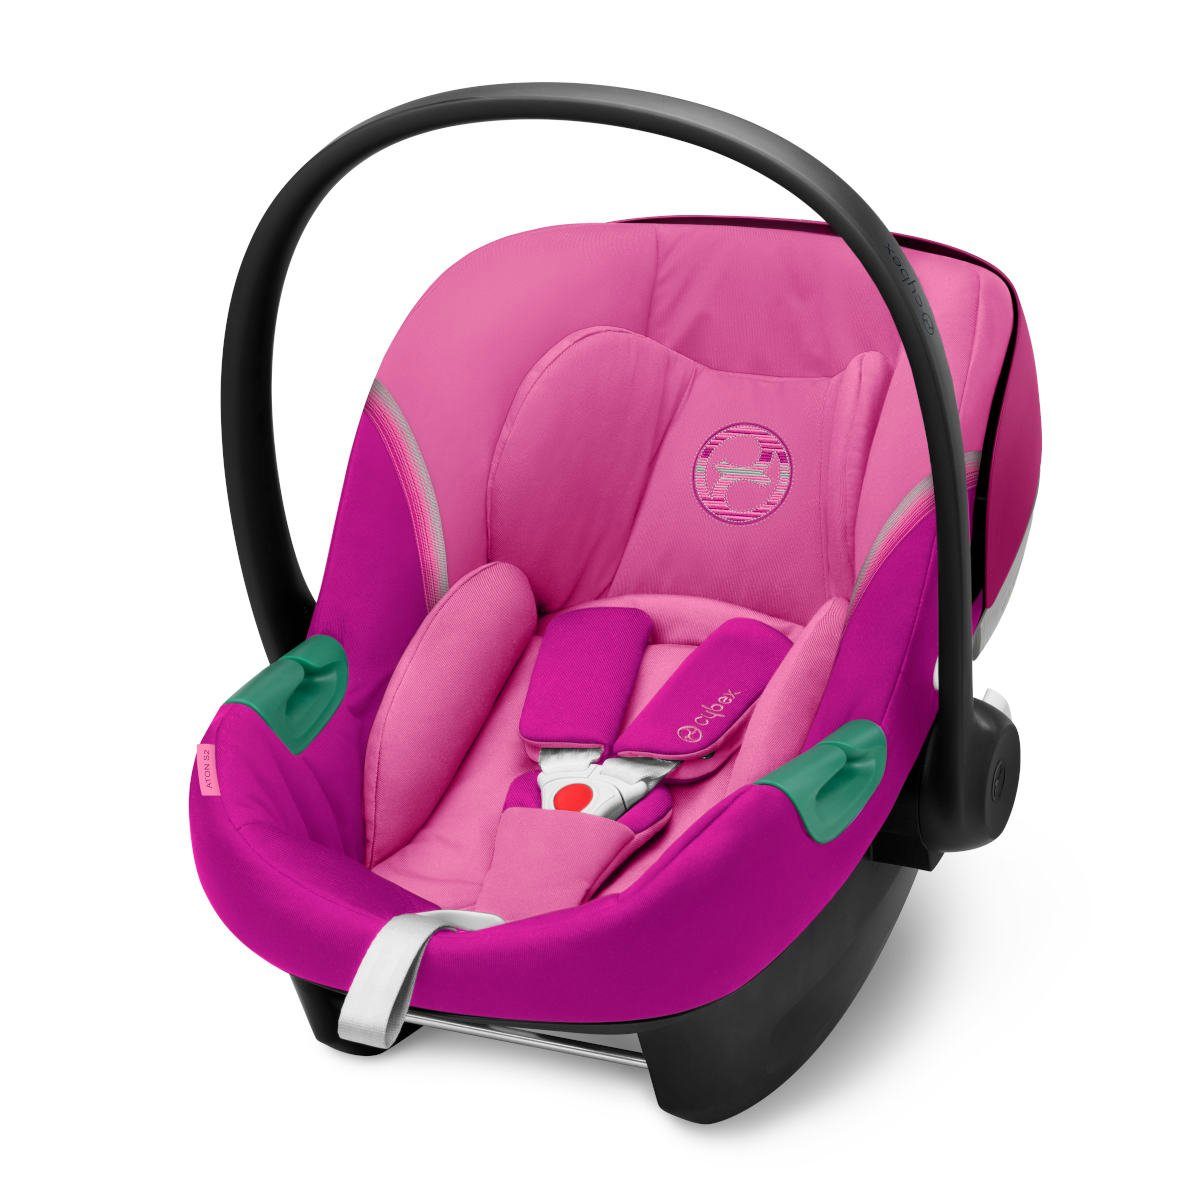 Rosa Cybex Kindersitze kaufen » Pinke Cybex Kindersitze